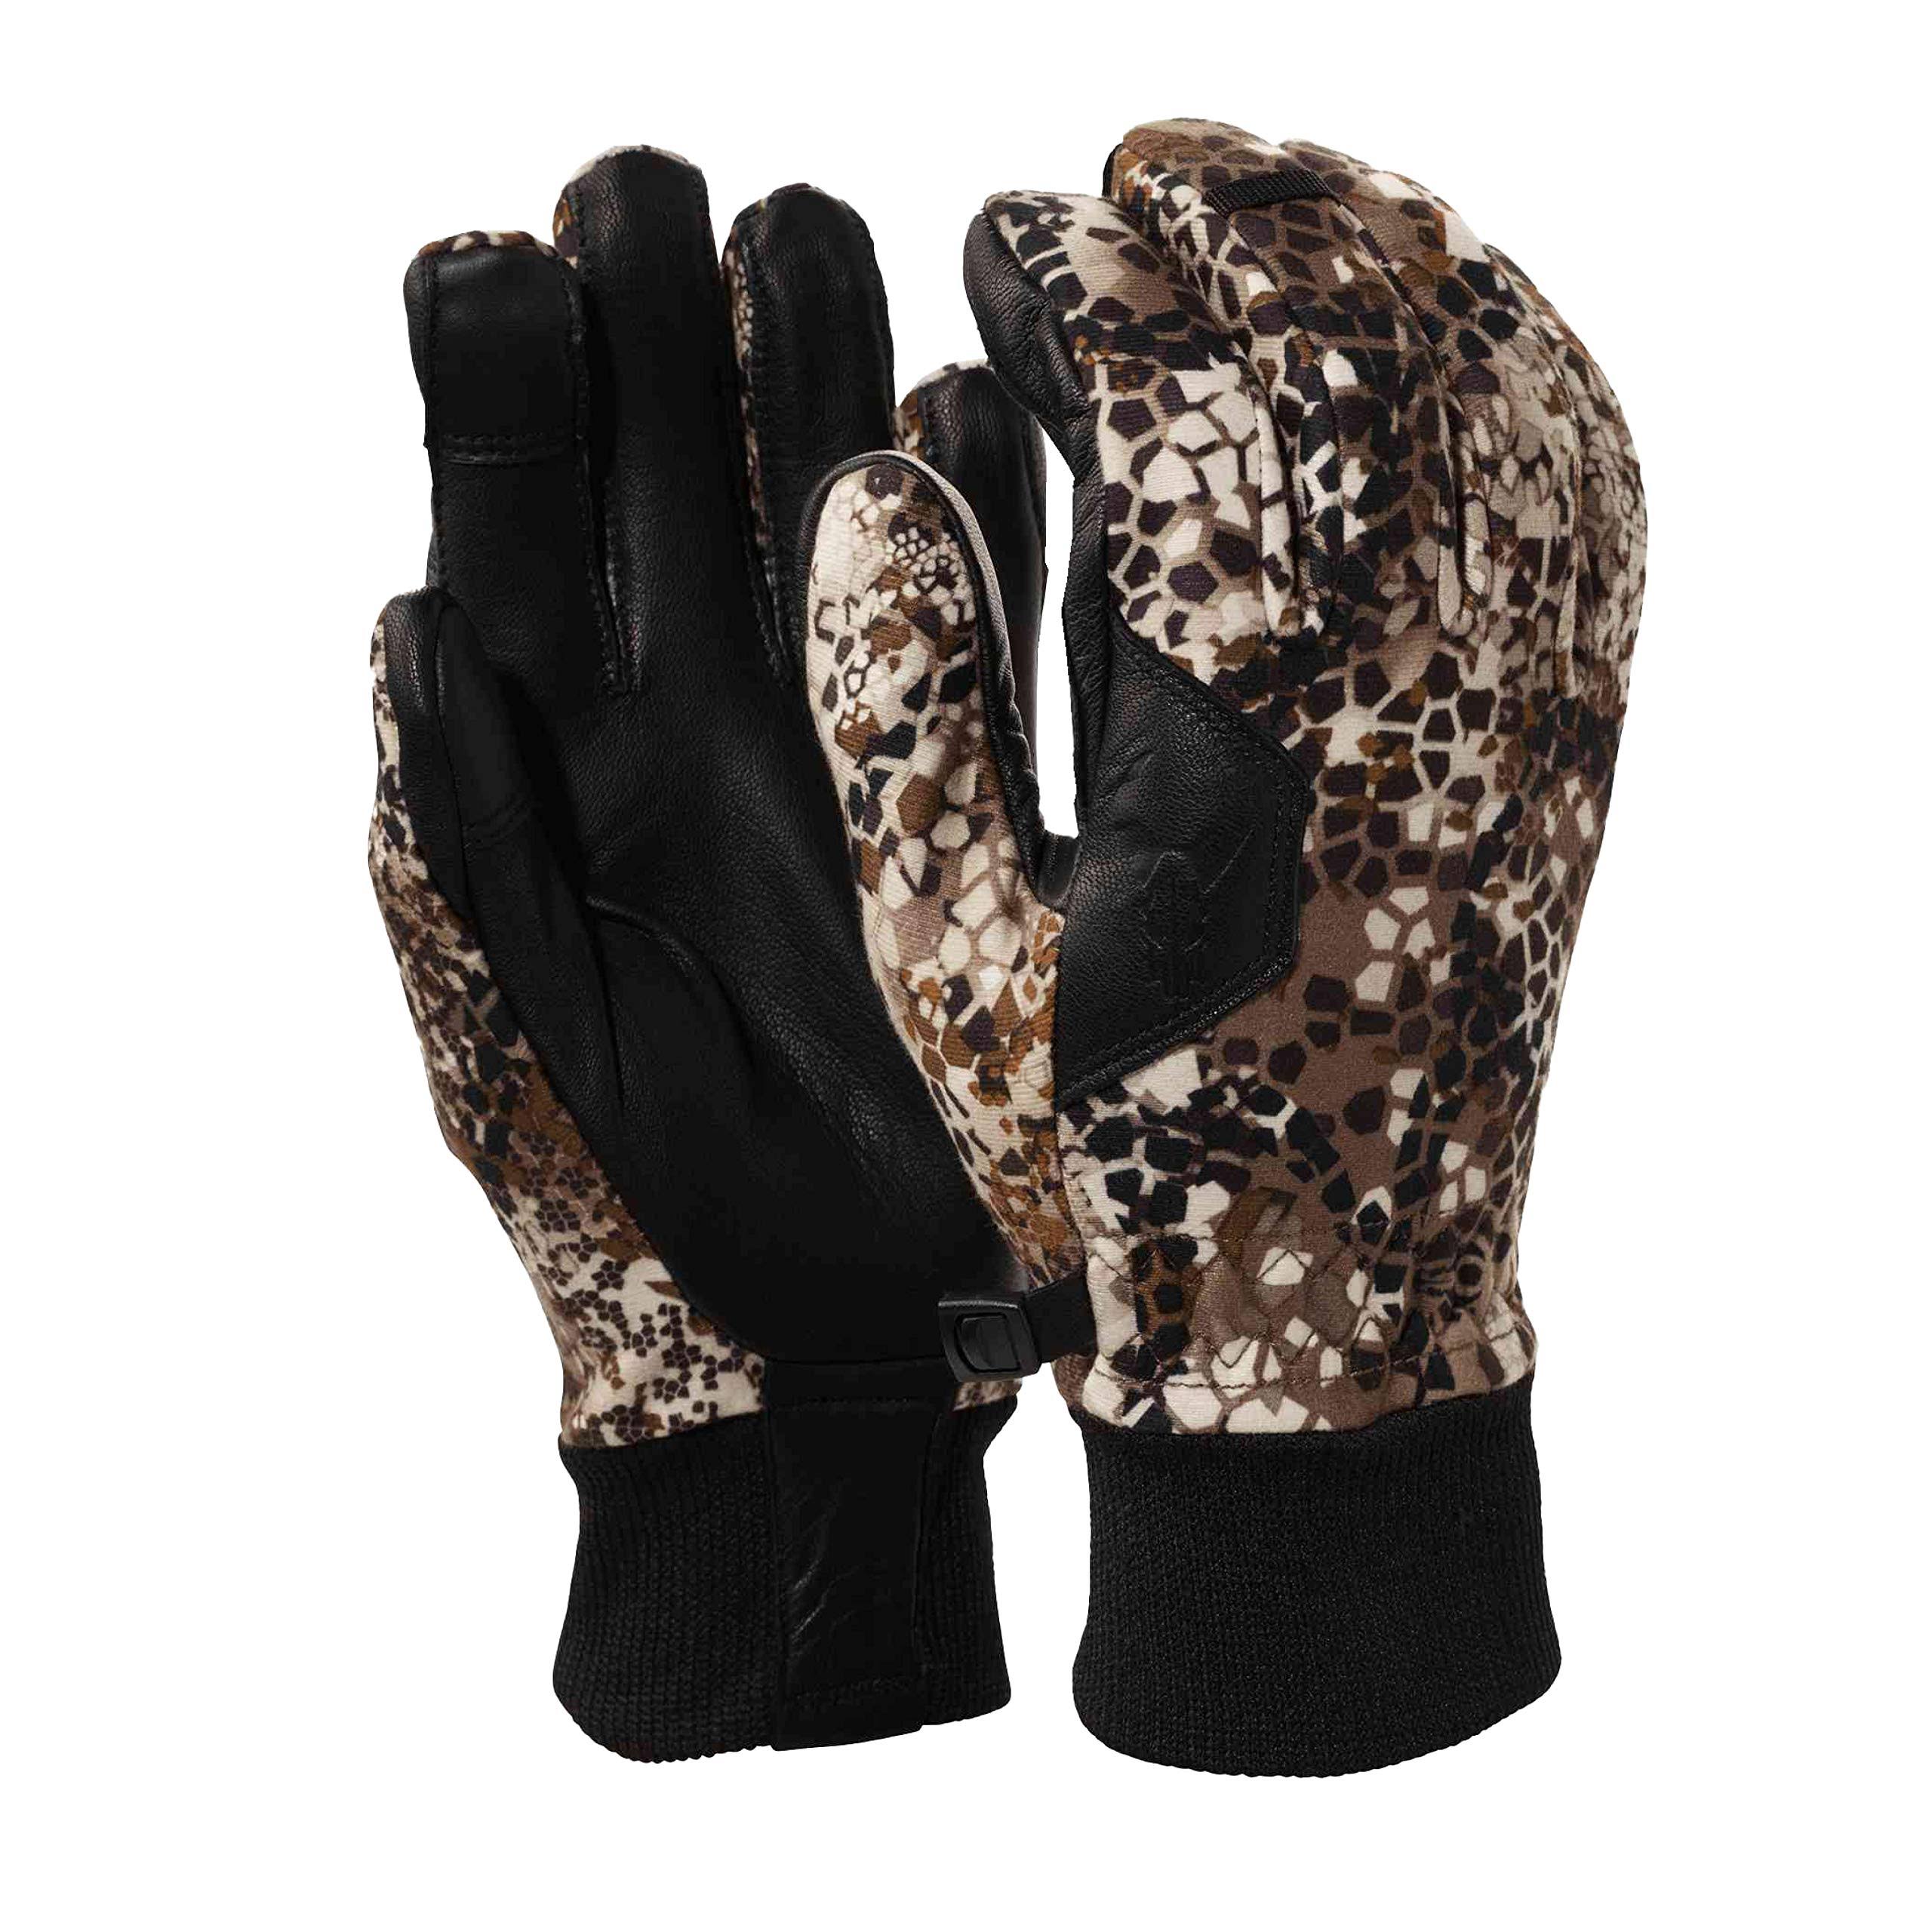 Badlands Hybrid Glove - Approach FX, Large